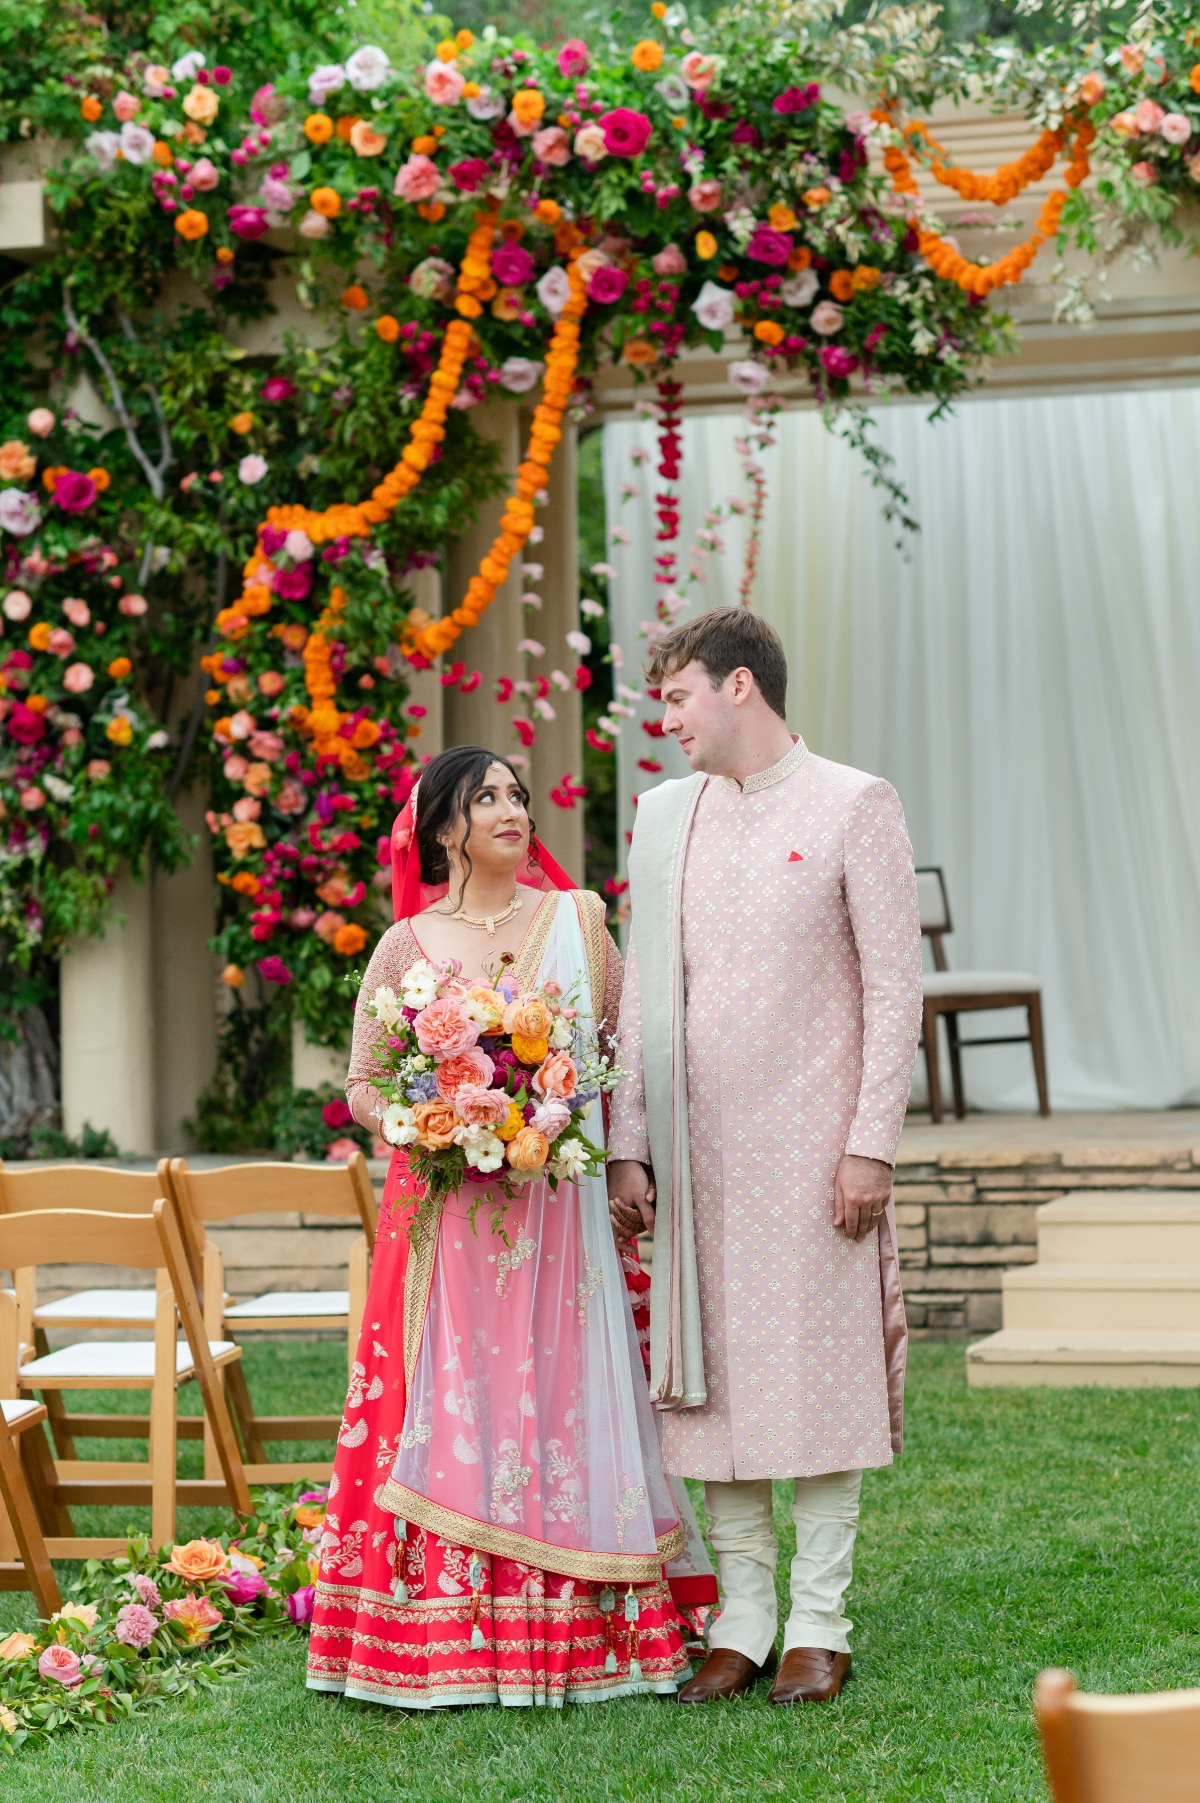 Hindu wedding attire